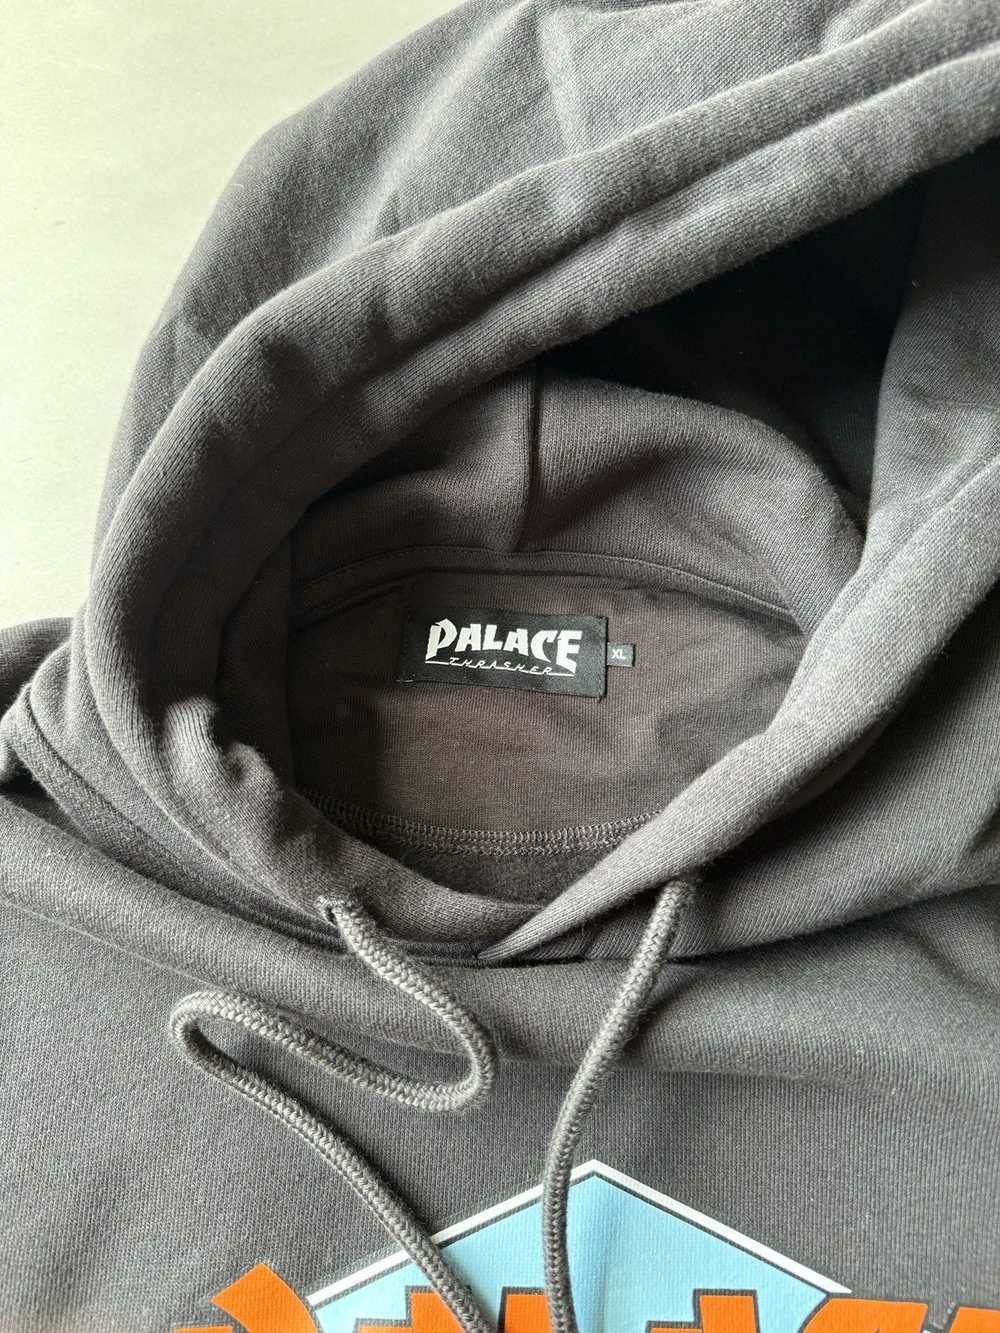 Palace × Thrasher Palace x Thrasher hoodie - image 3